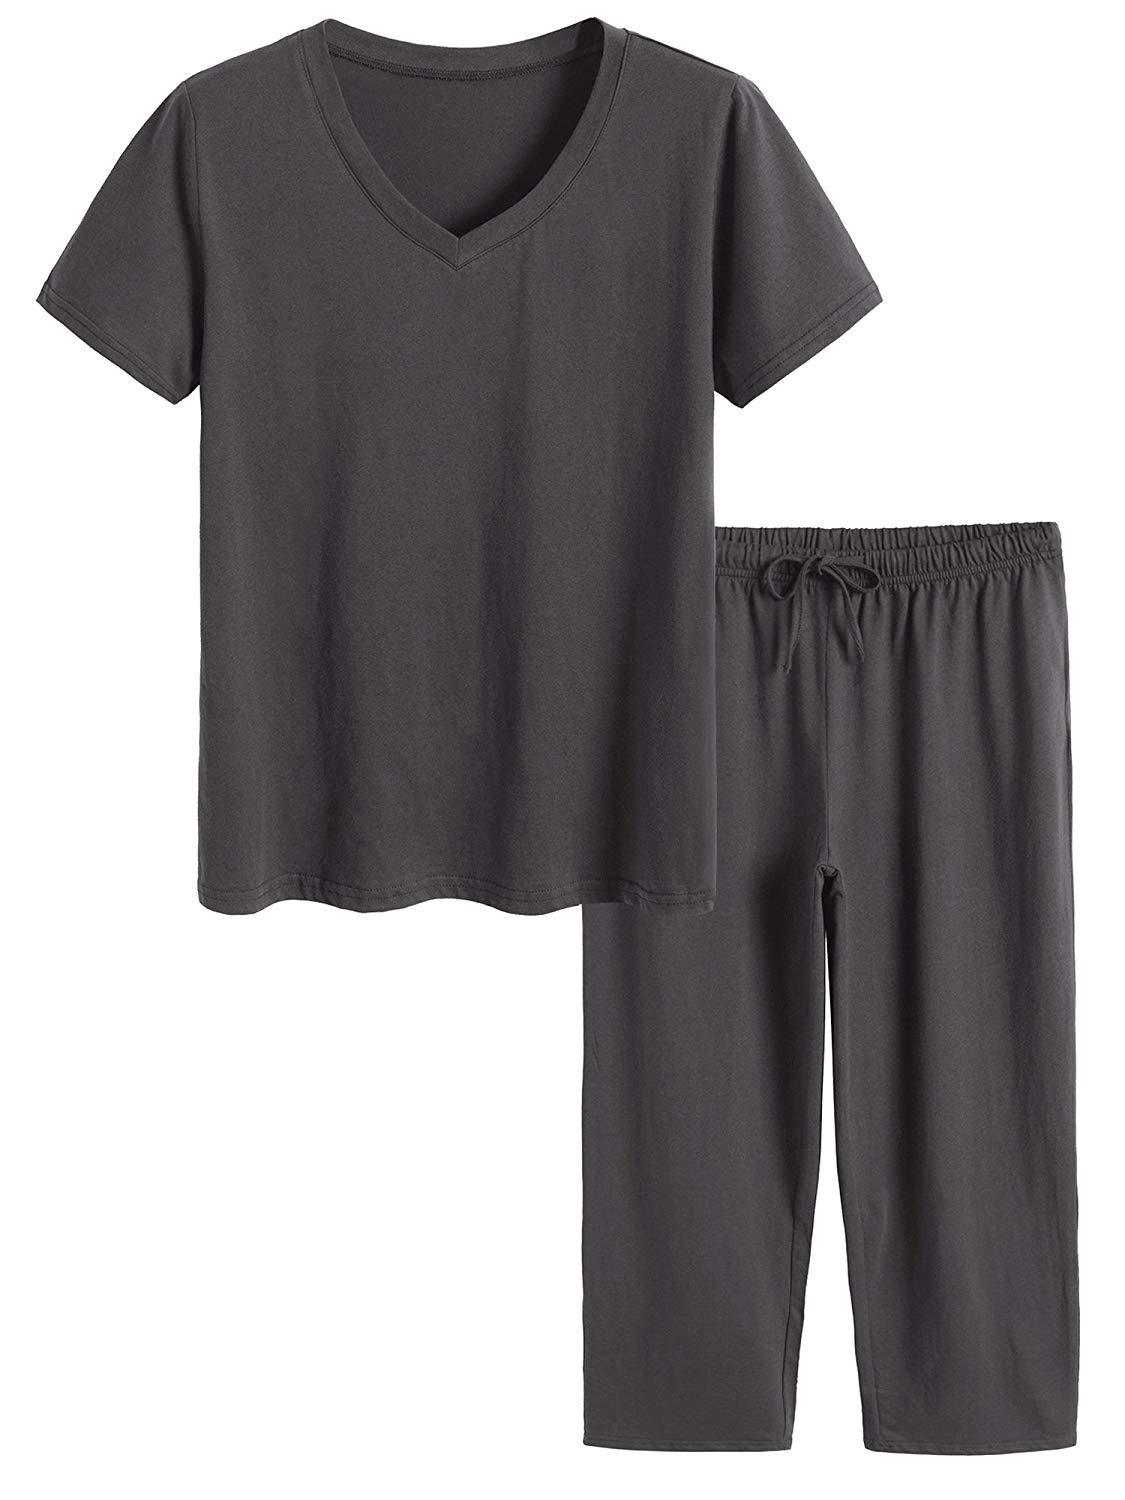 Latuza Women's Pleated Loungewear Top and Capris Pajamas Set 